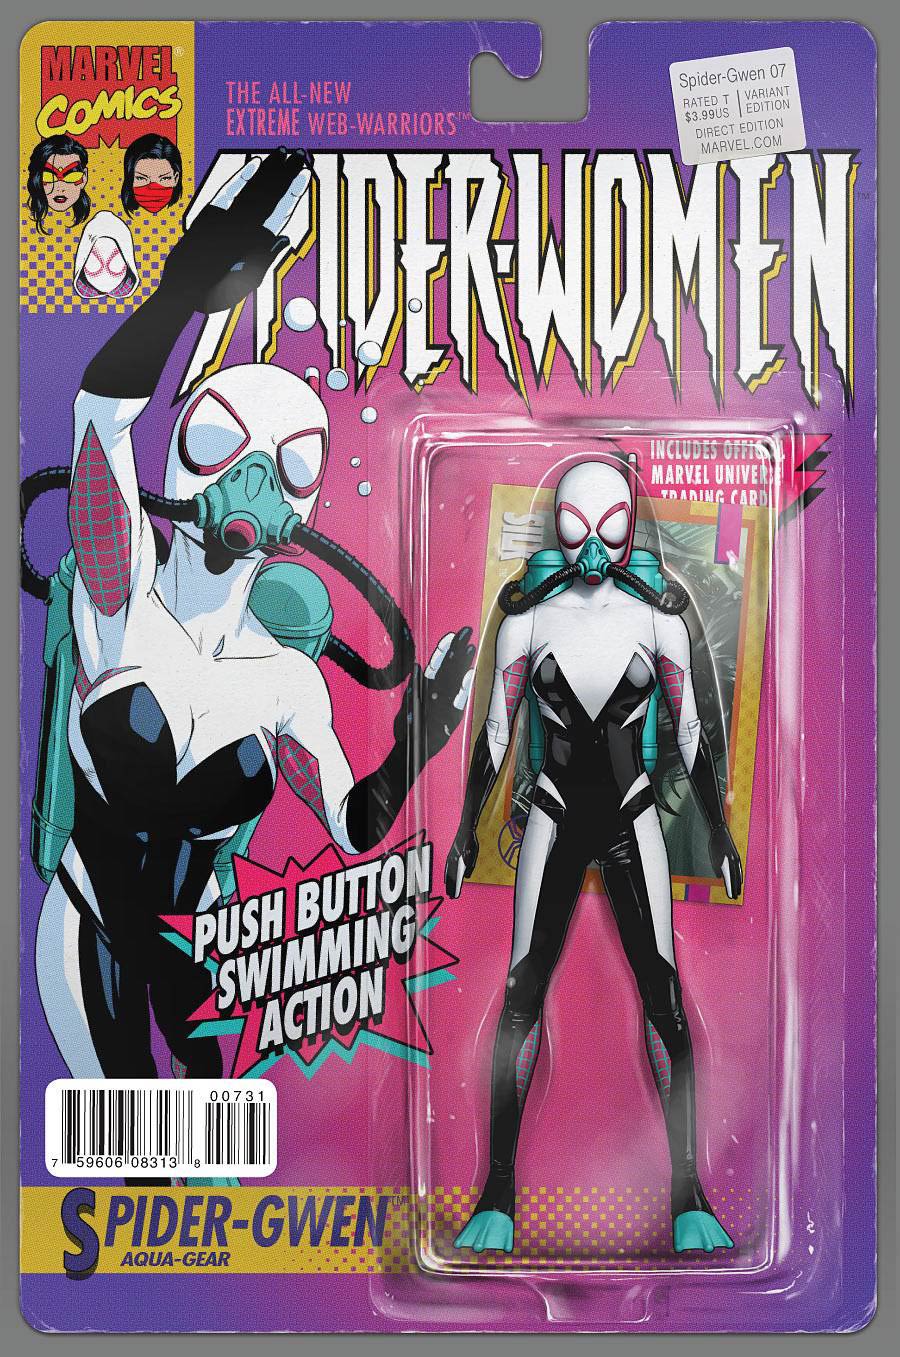 Spider-Gwen Vol 2 #7 Cover C Variant John Tyler Christopher Action Figre Cover (Spider-Women Part 2)